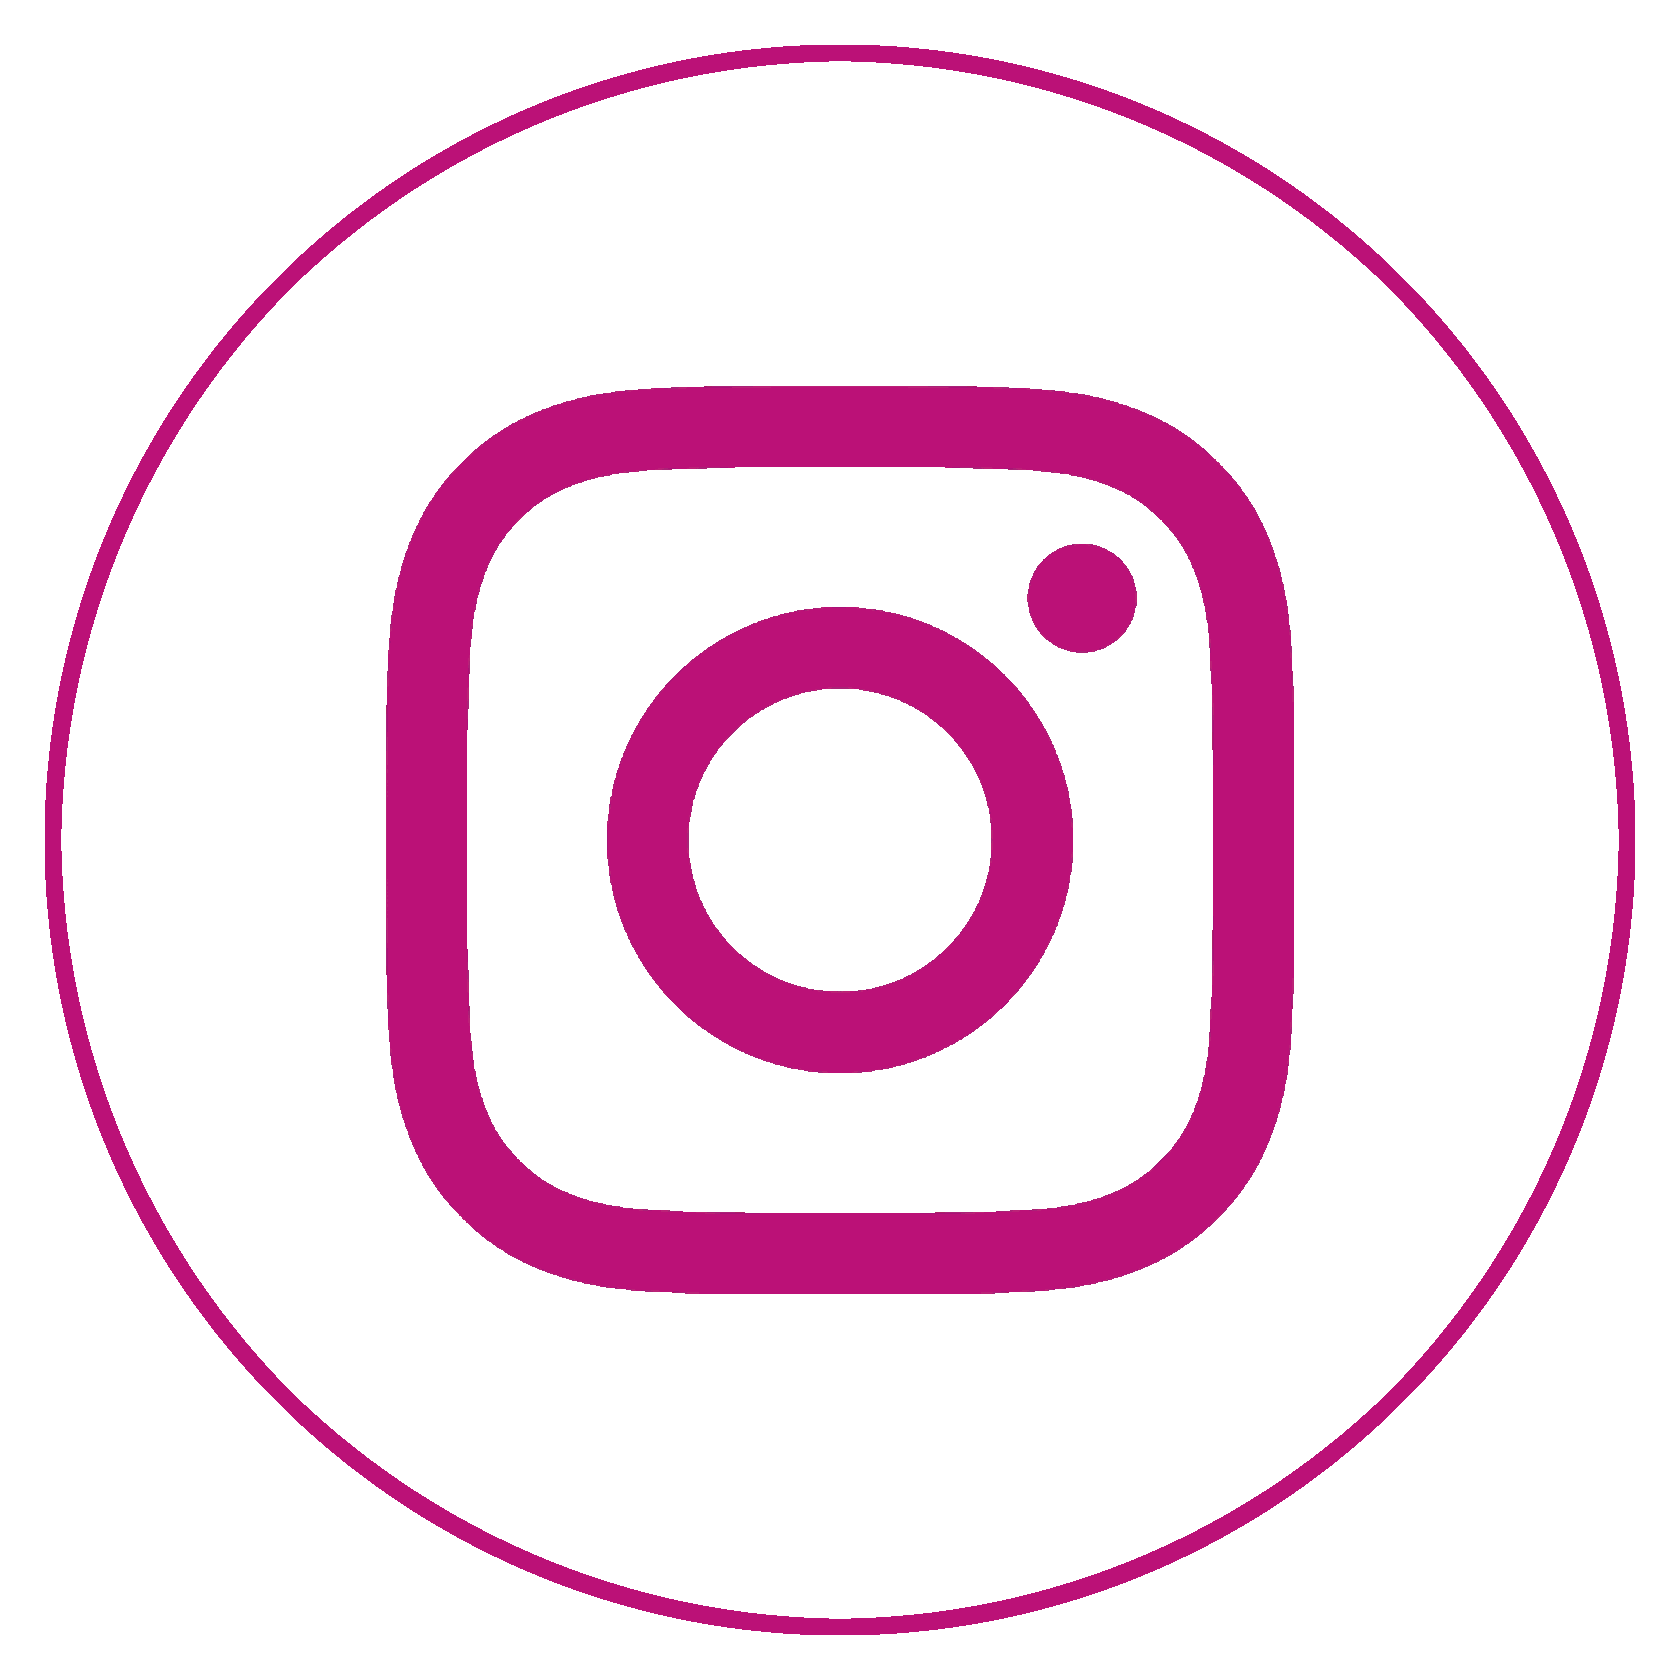 Логотип инстаграма. Значок Instagram. Знак инстаграмма на прозрачном фоне. Логотип Инстаграмм для визитки.